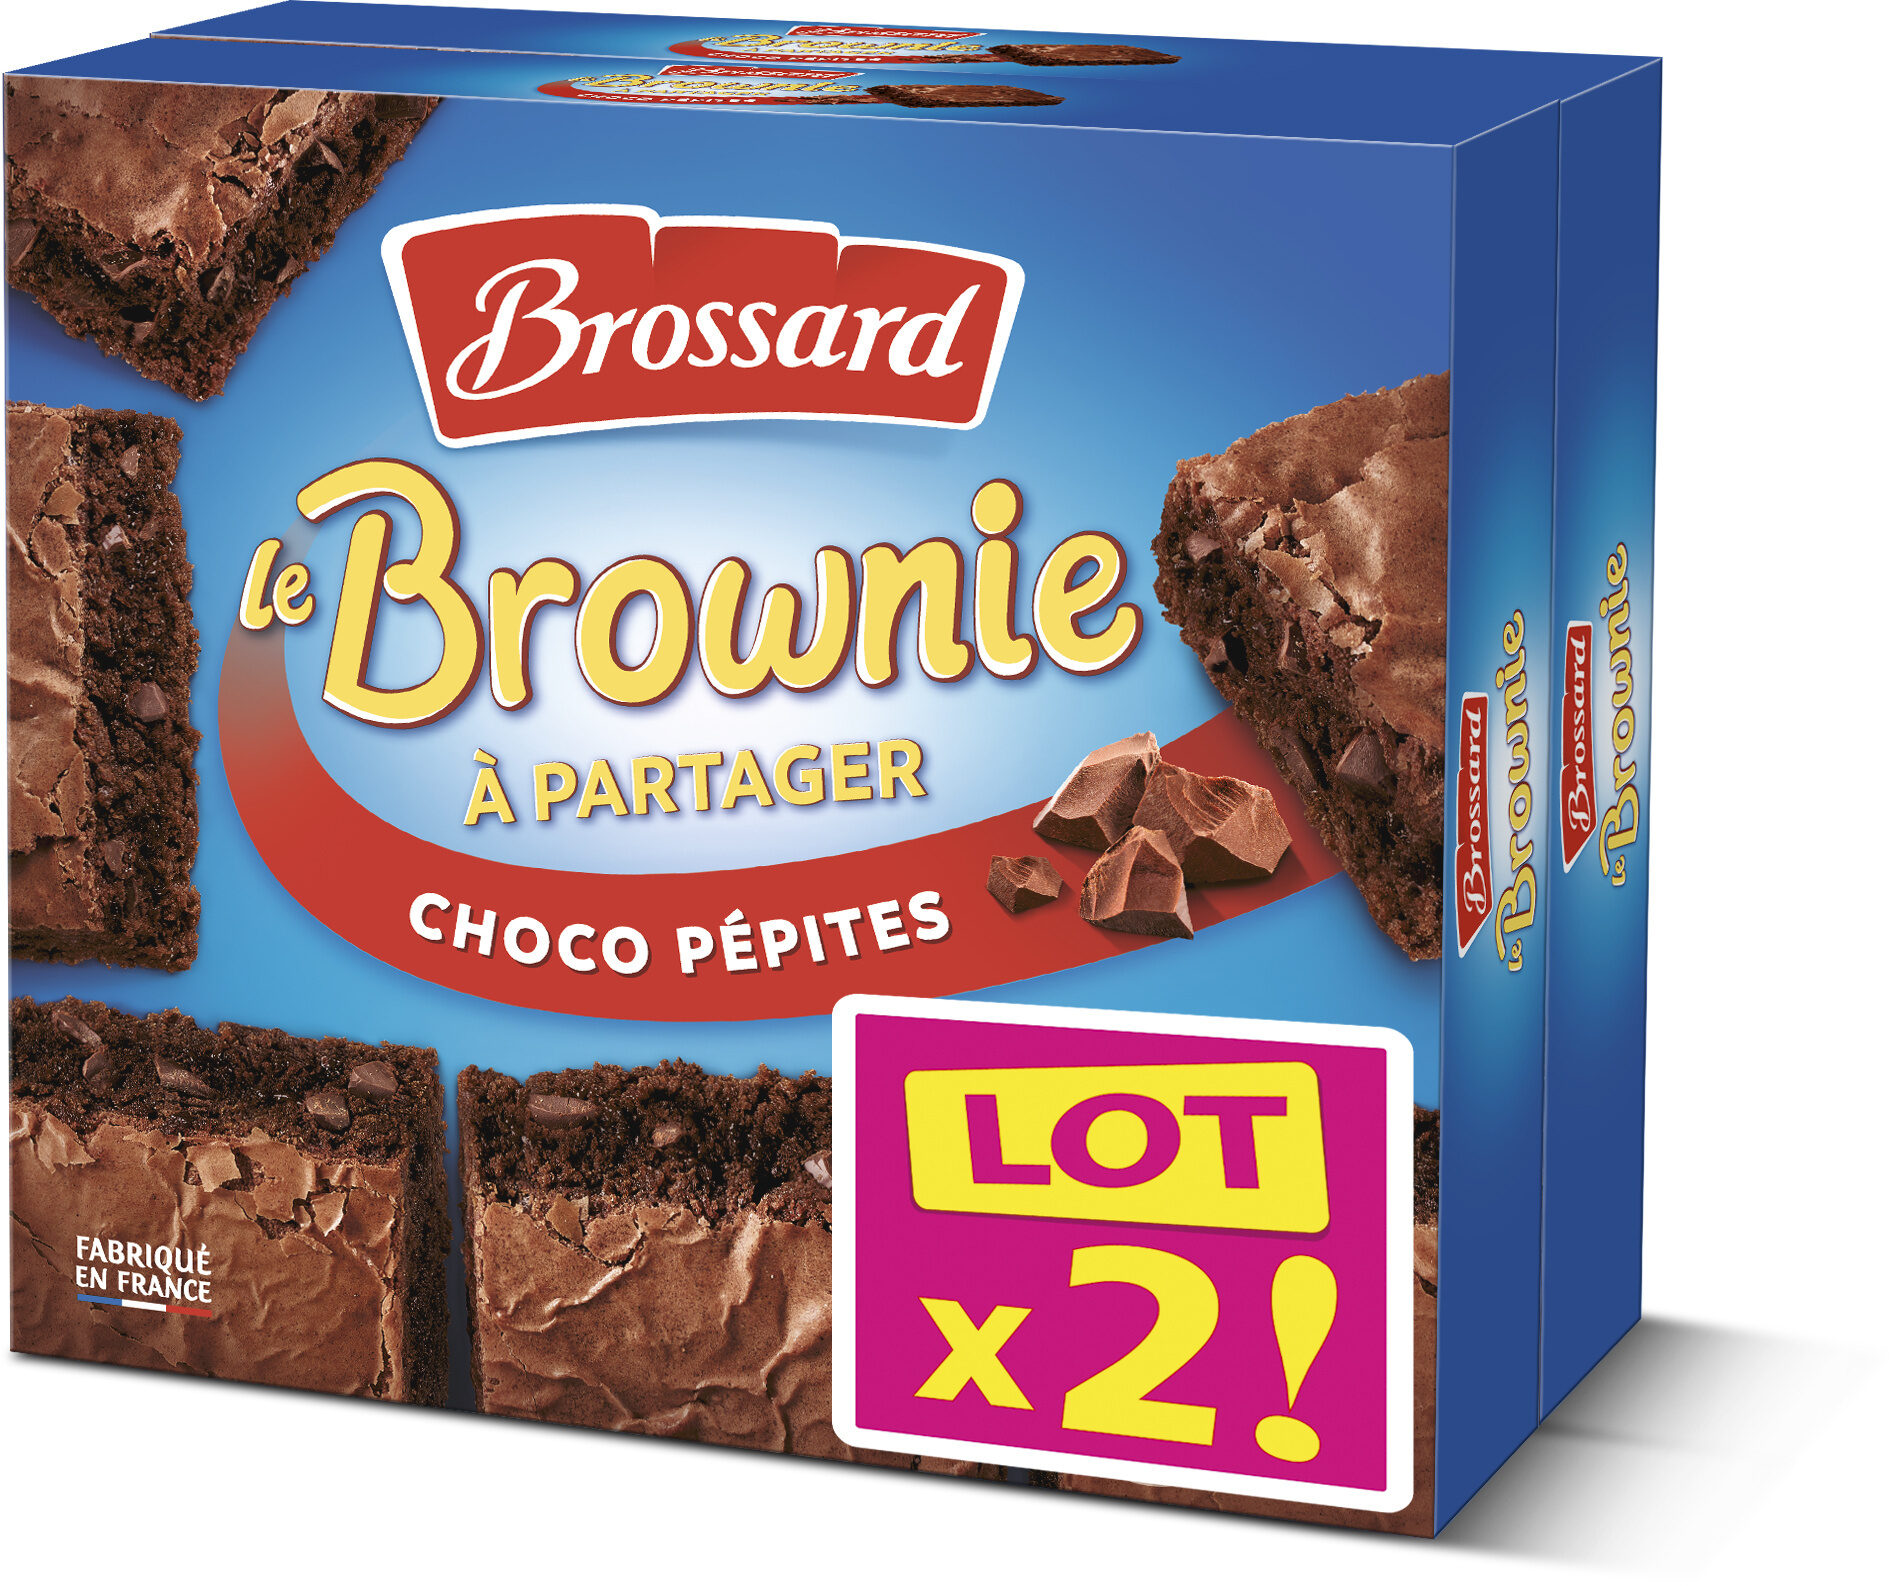 Brossard - lot 2 brownie chocolat pepites chocolat 285gr - Product - fr